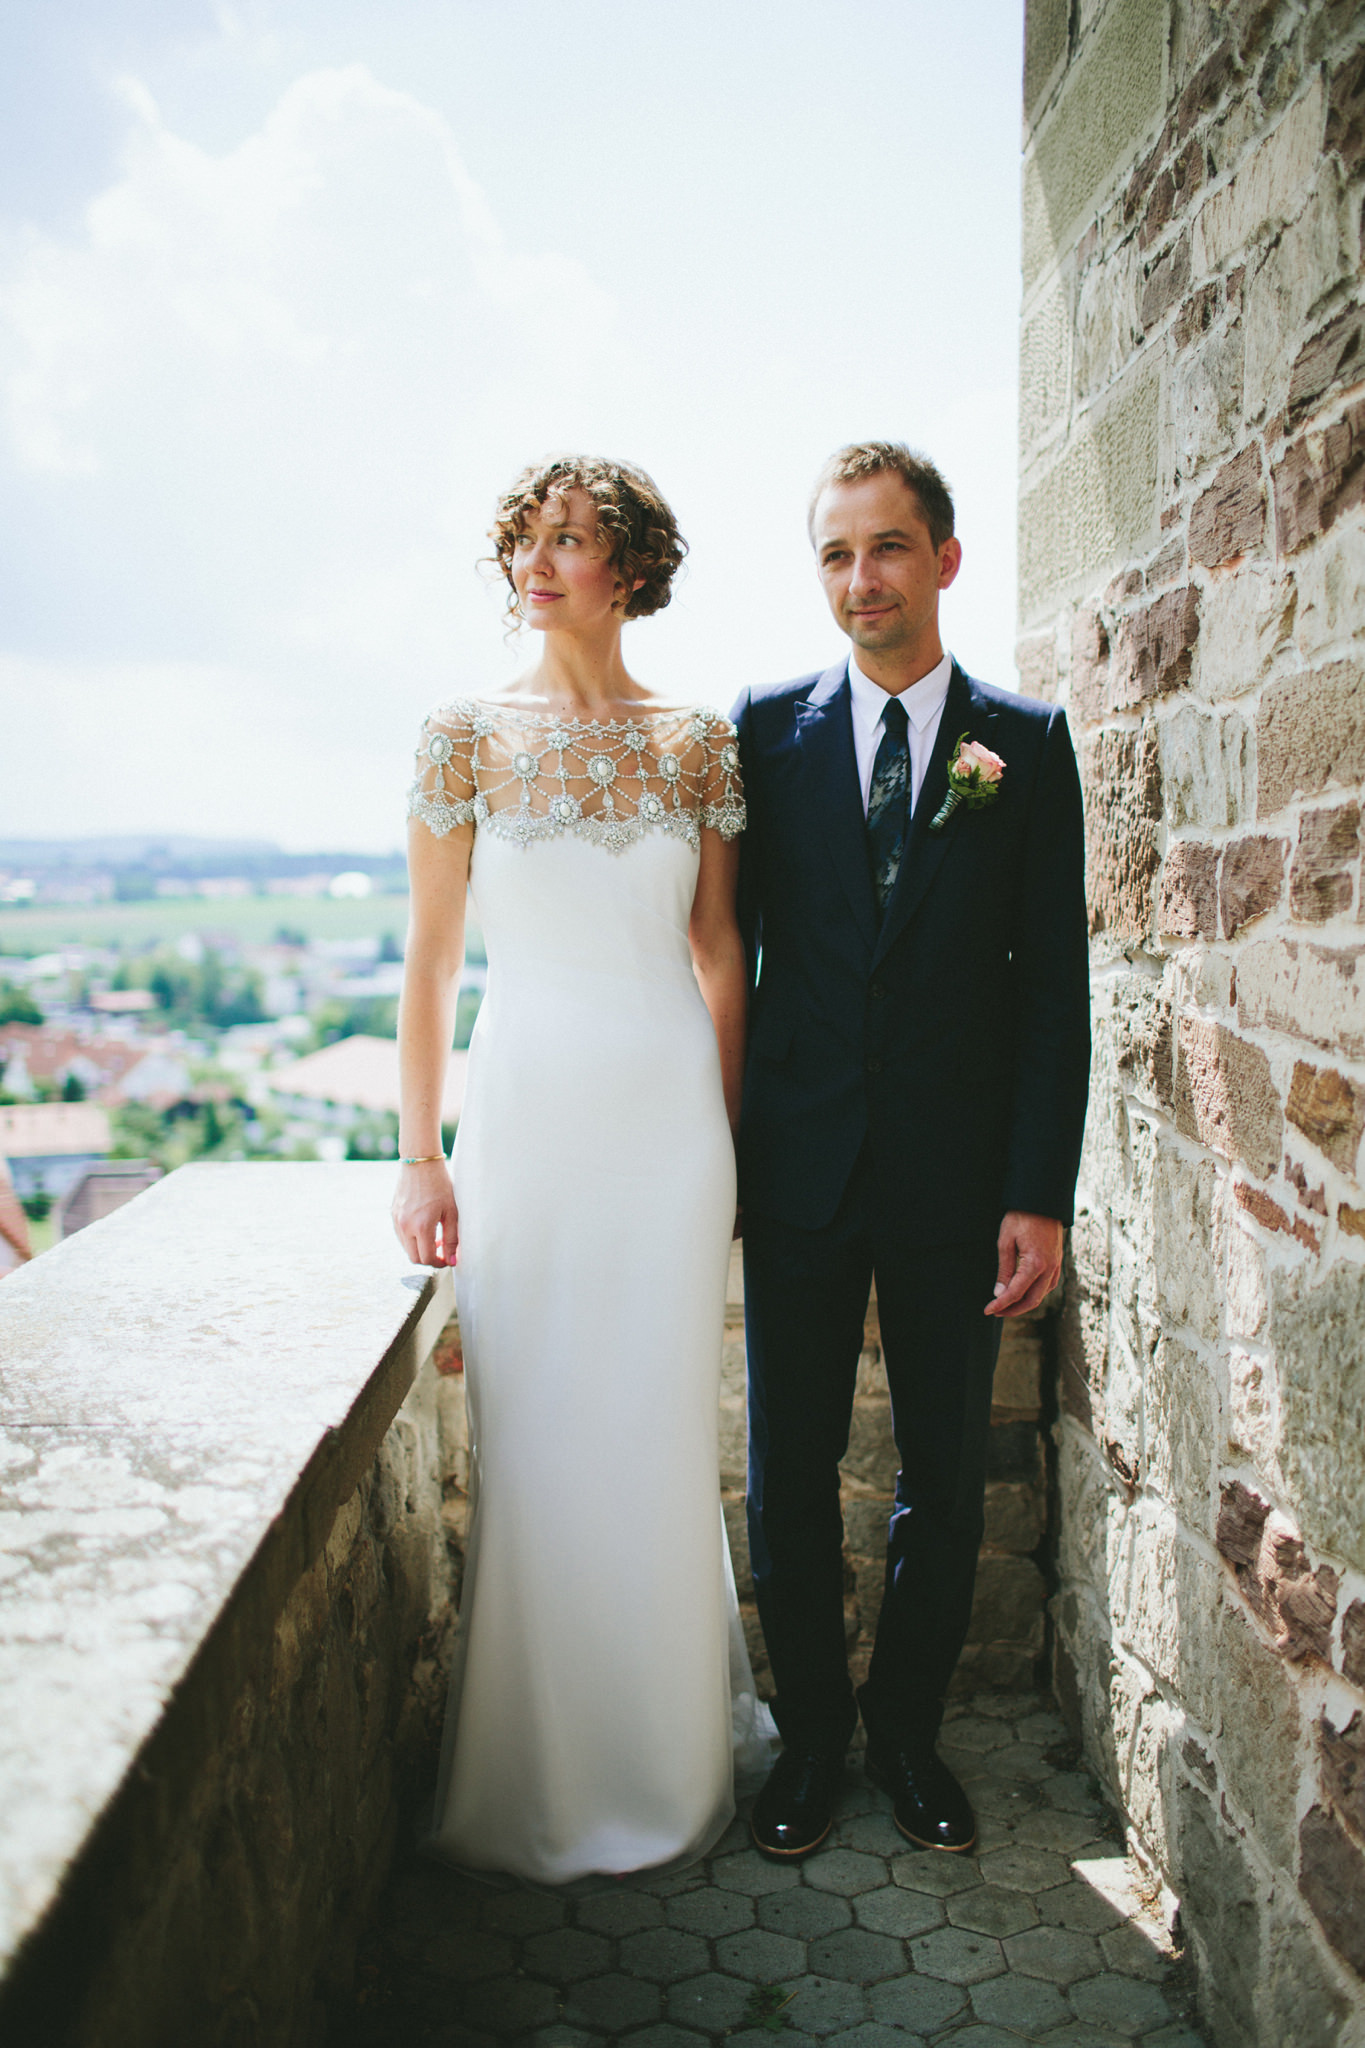 Germany wedding photography by Katch Silva - Beilstein Vineyard